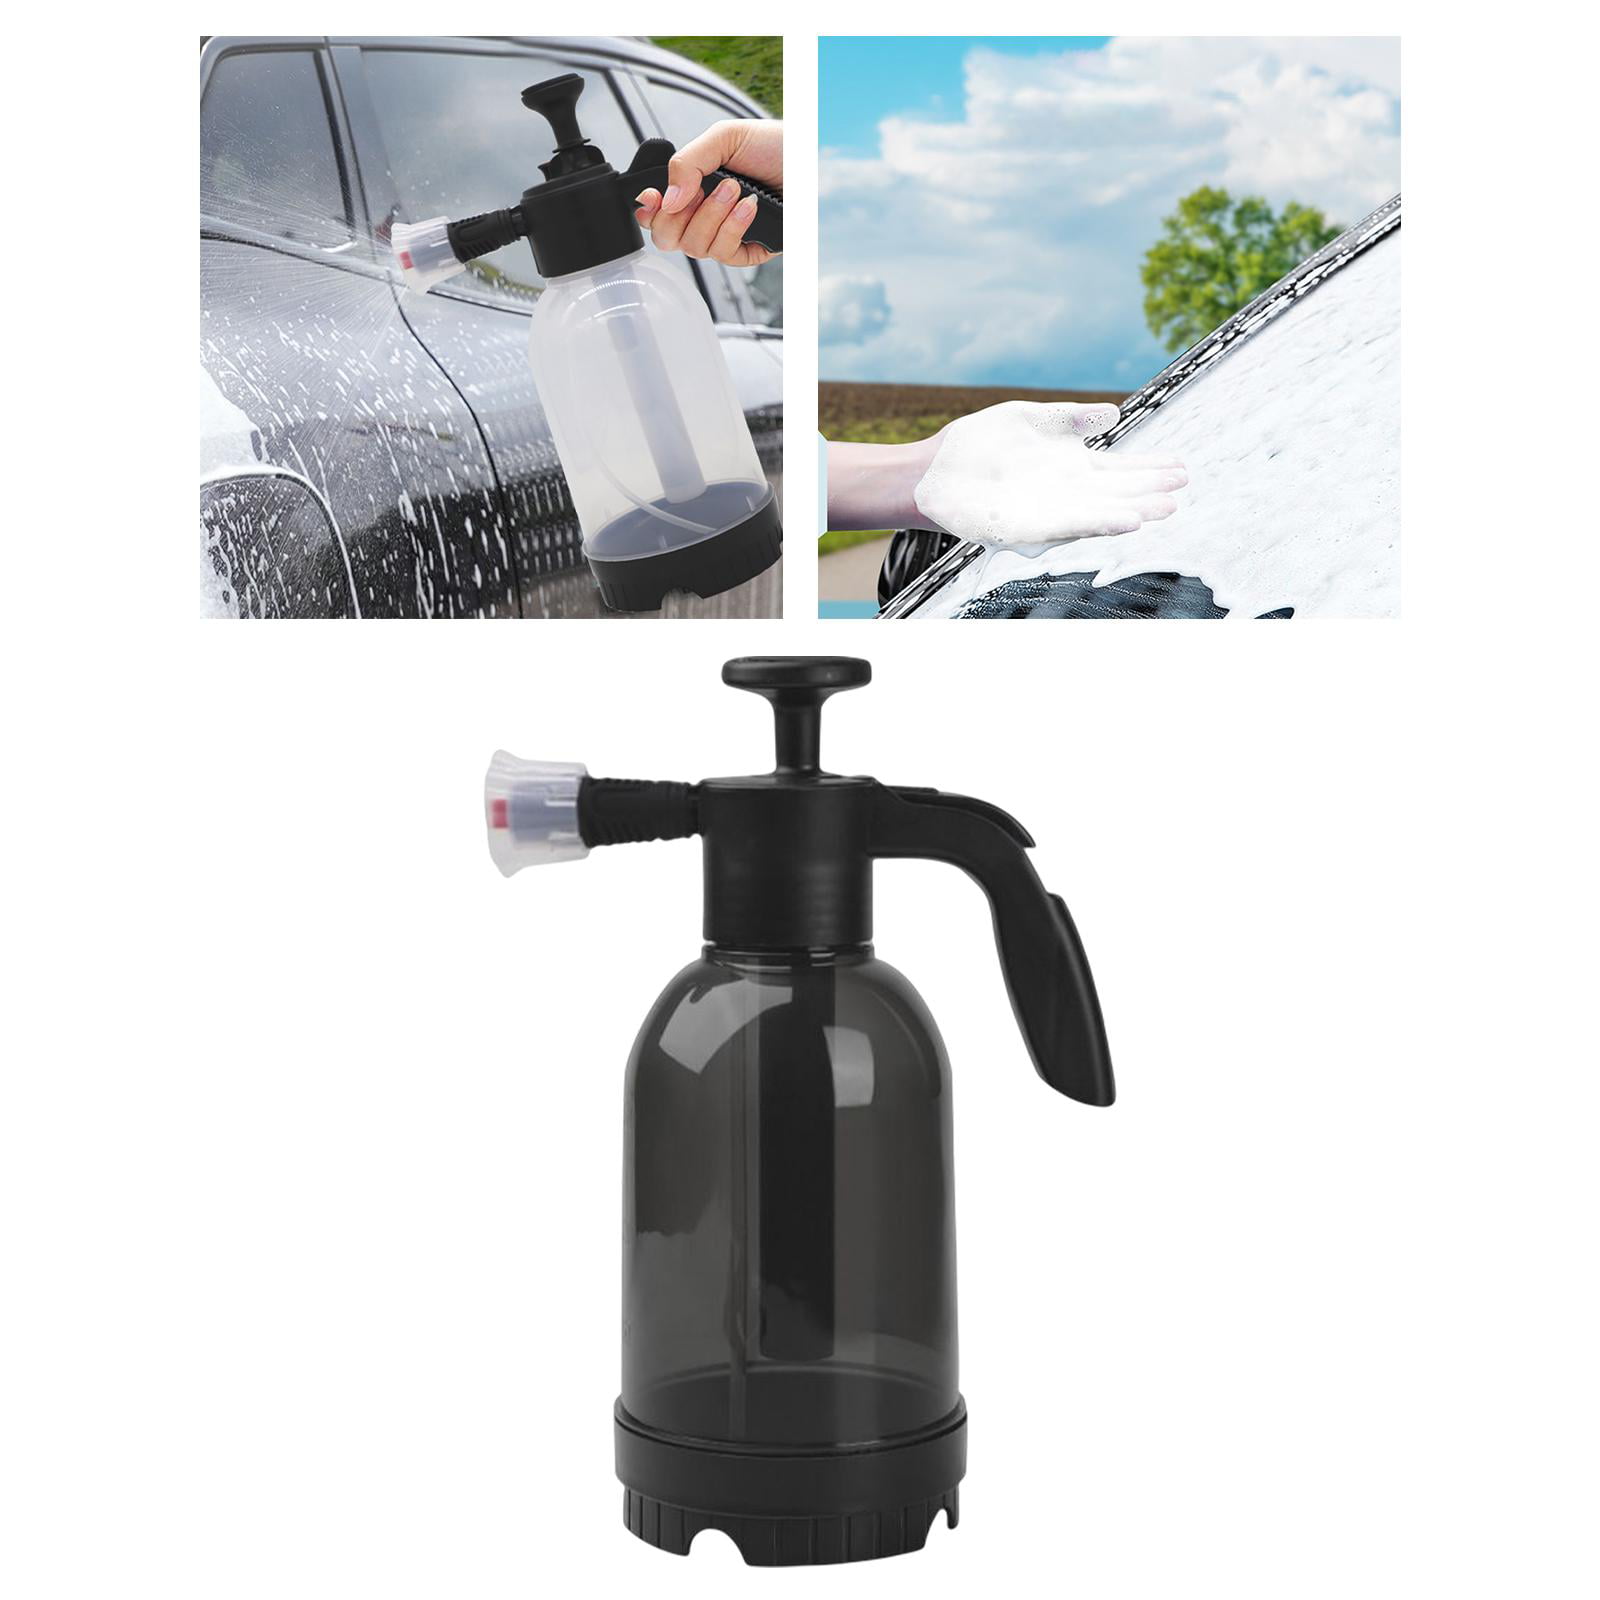 Foam Sprayer, Foaming Pump Hand Pressure Sprayer Water Sprayer Bottle Hand Pressurized Soap Foam Sprayer Manual Pump Car Wash, Size: 14x14x35cm, White